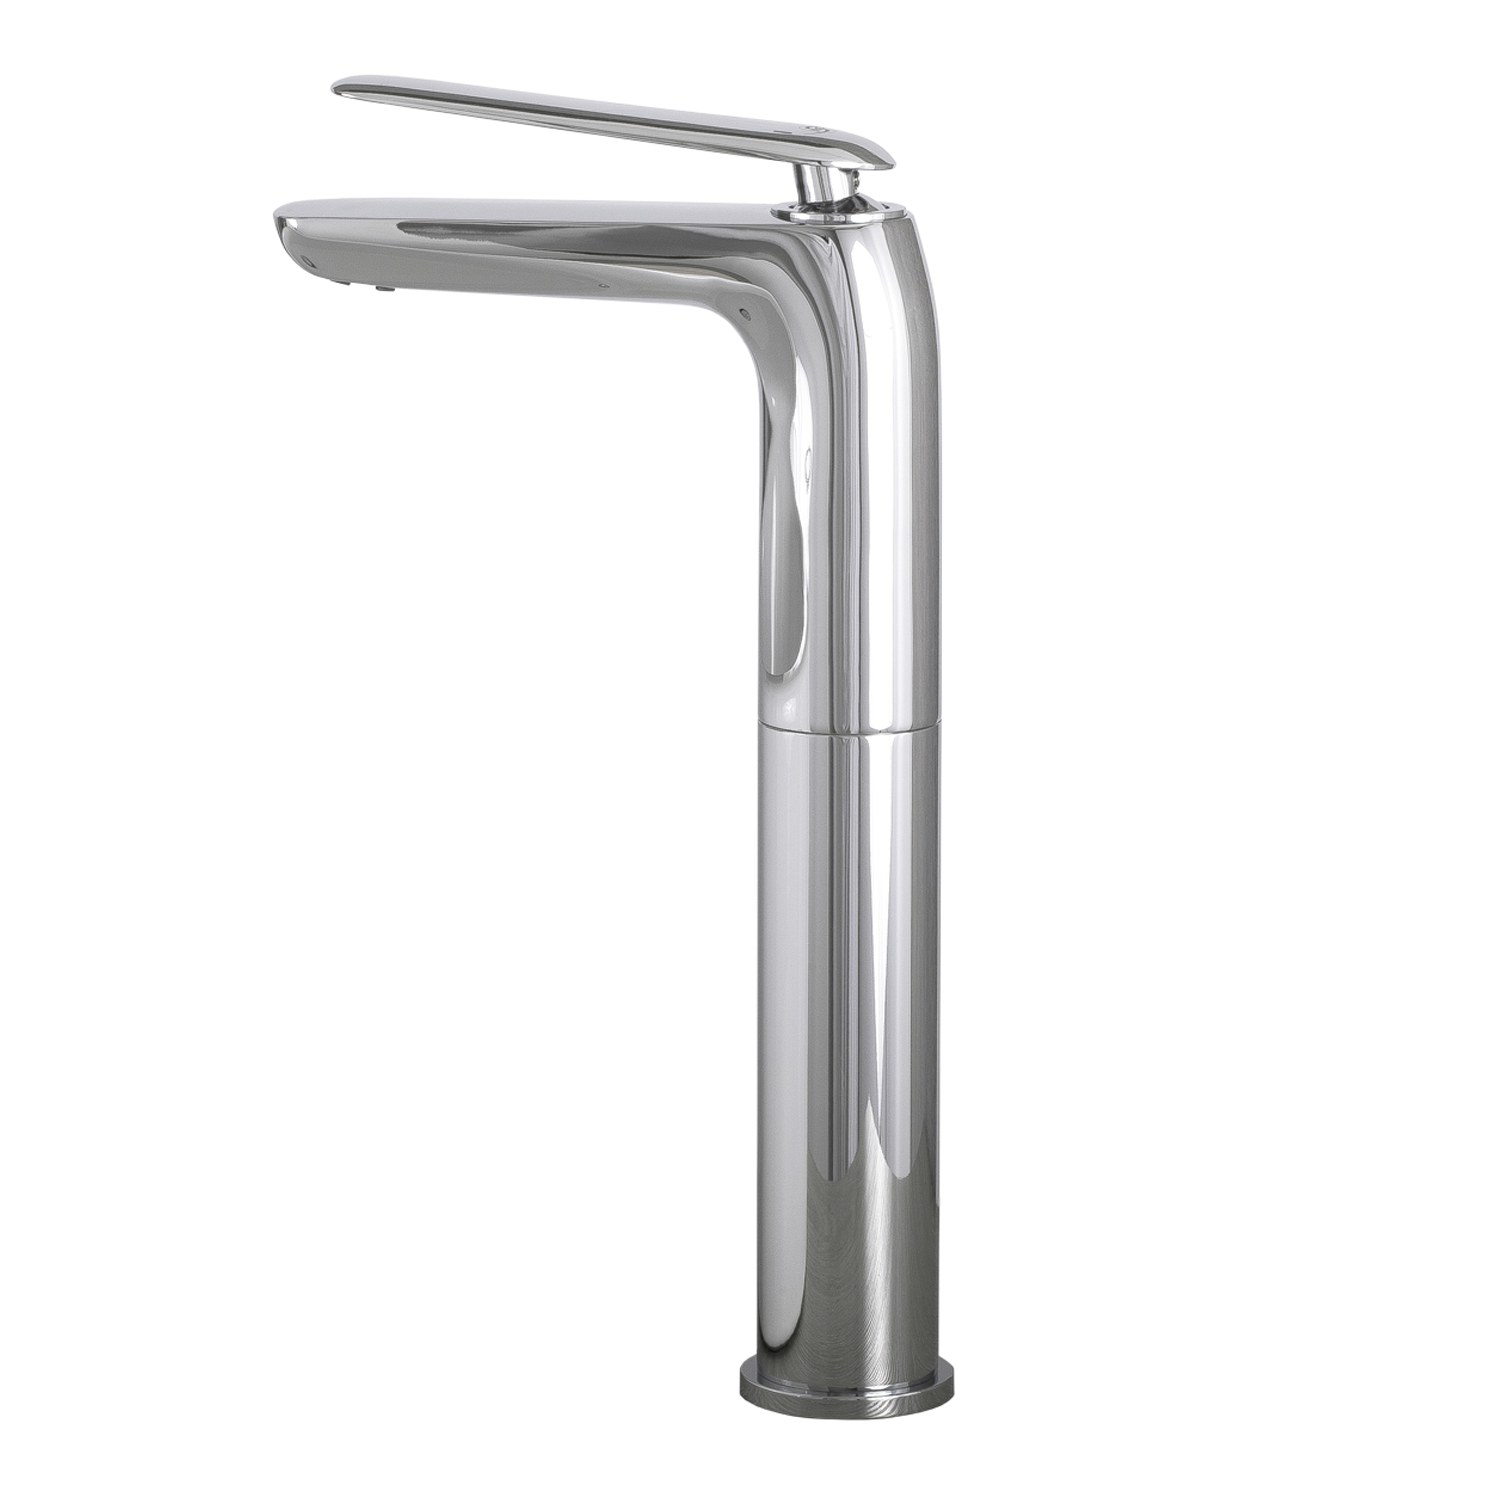 DAX Single Handle Vessel Sink Bathroom Faucet, Brass Body, Chrome Finish, 4-3/4 x 12-3/8 Inches (DAX-8206B)